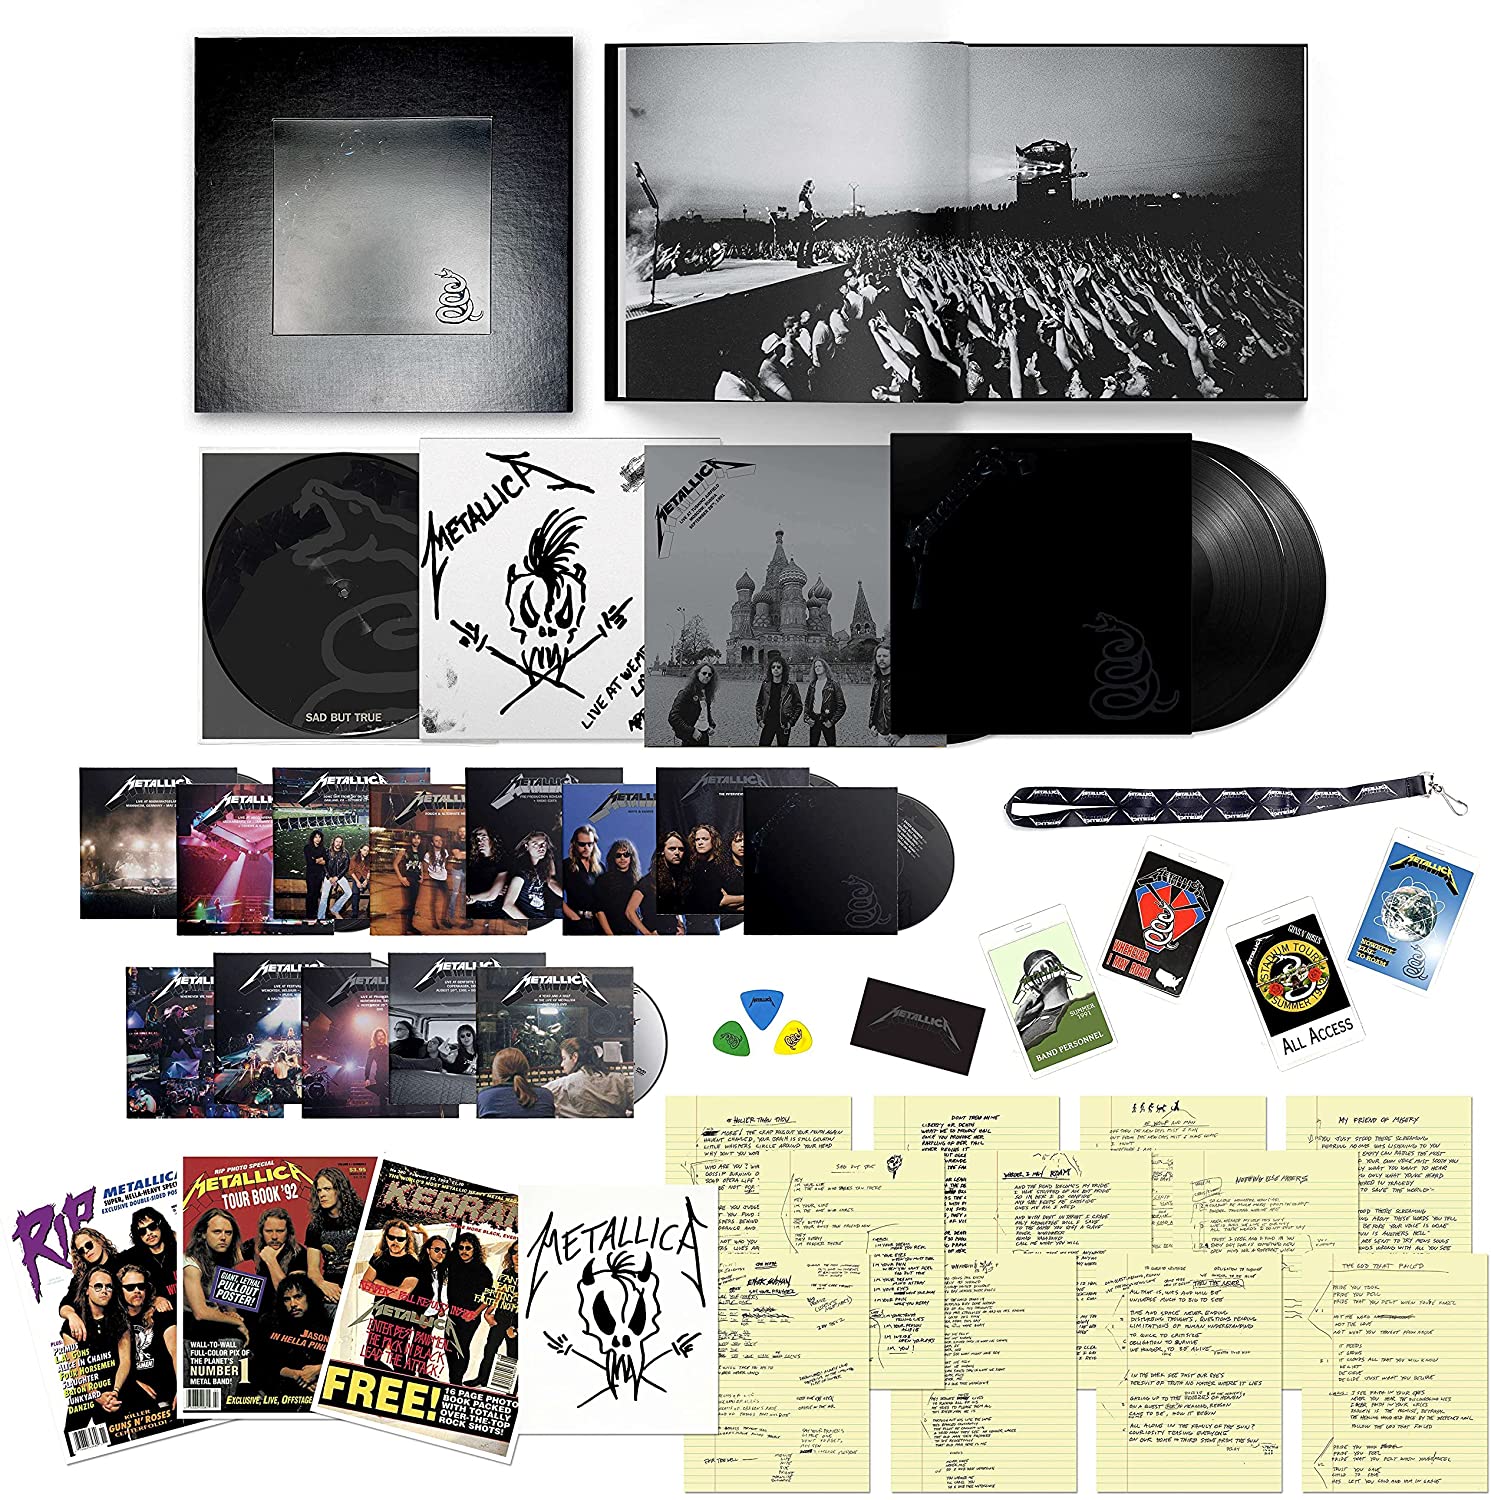 The Metallica Blacklist/Black Album in Black & White Collectors Series